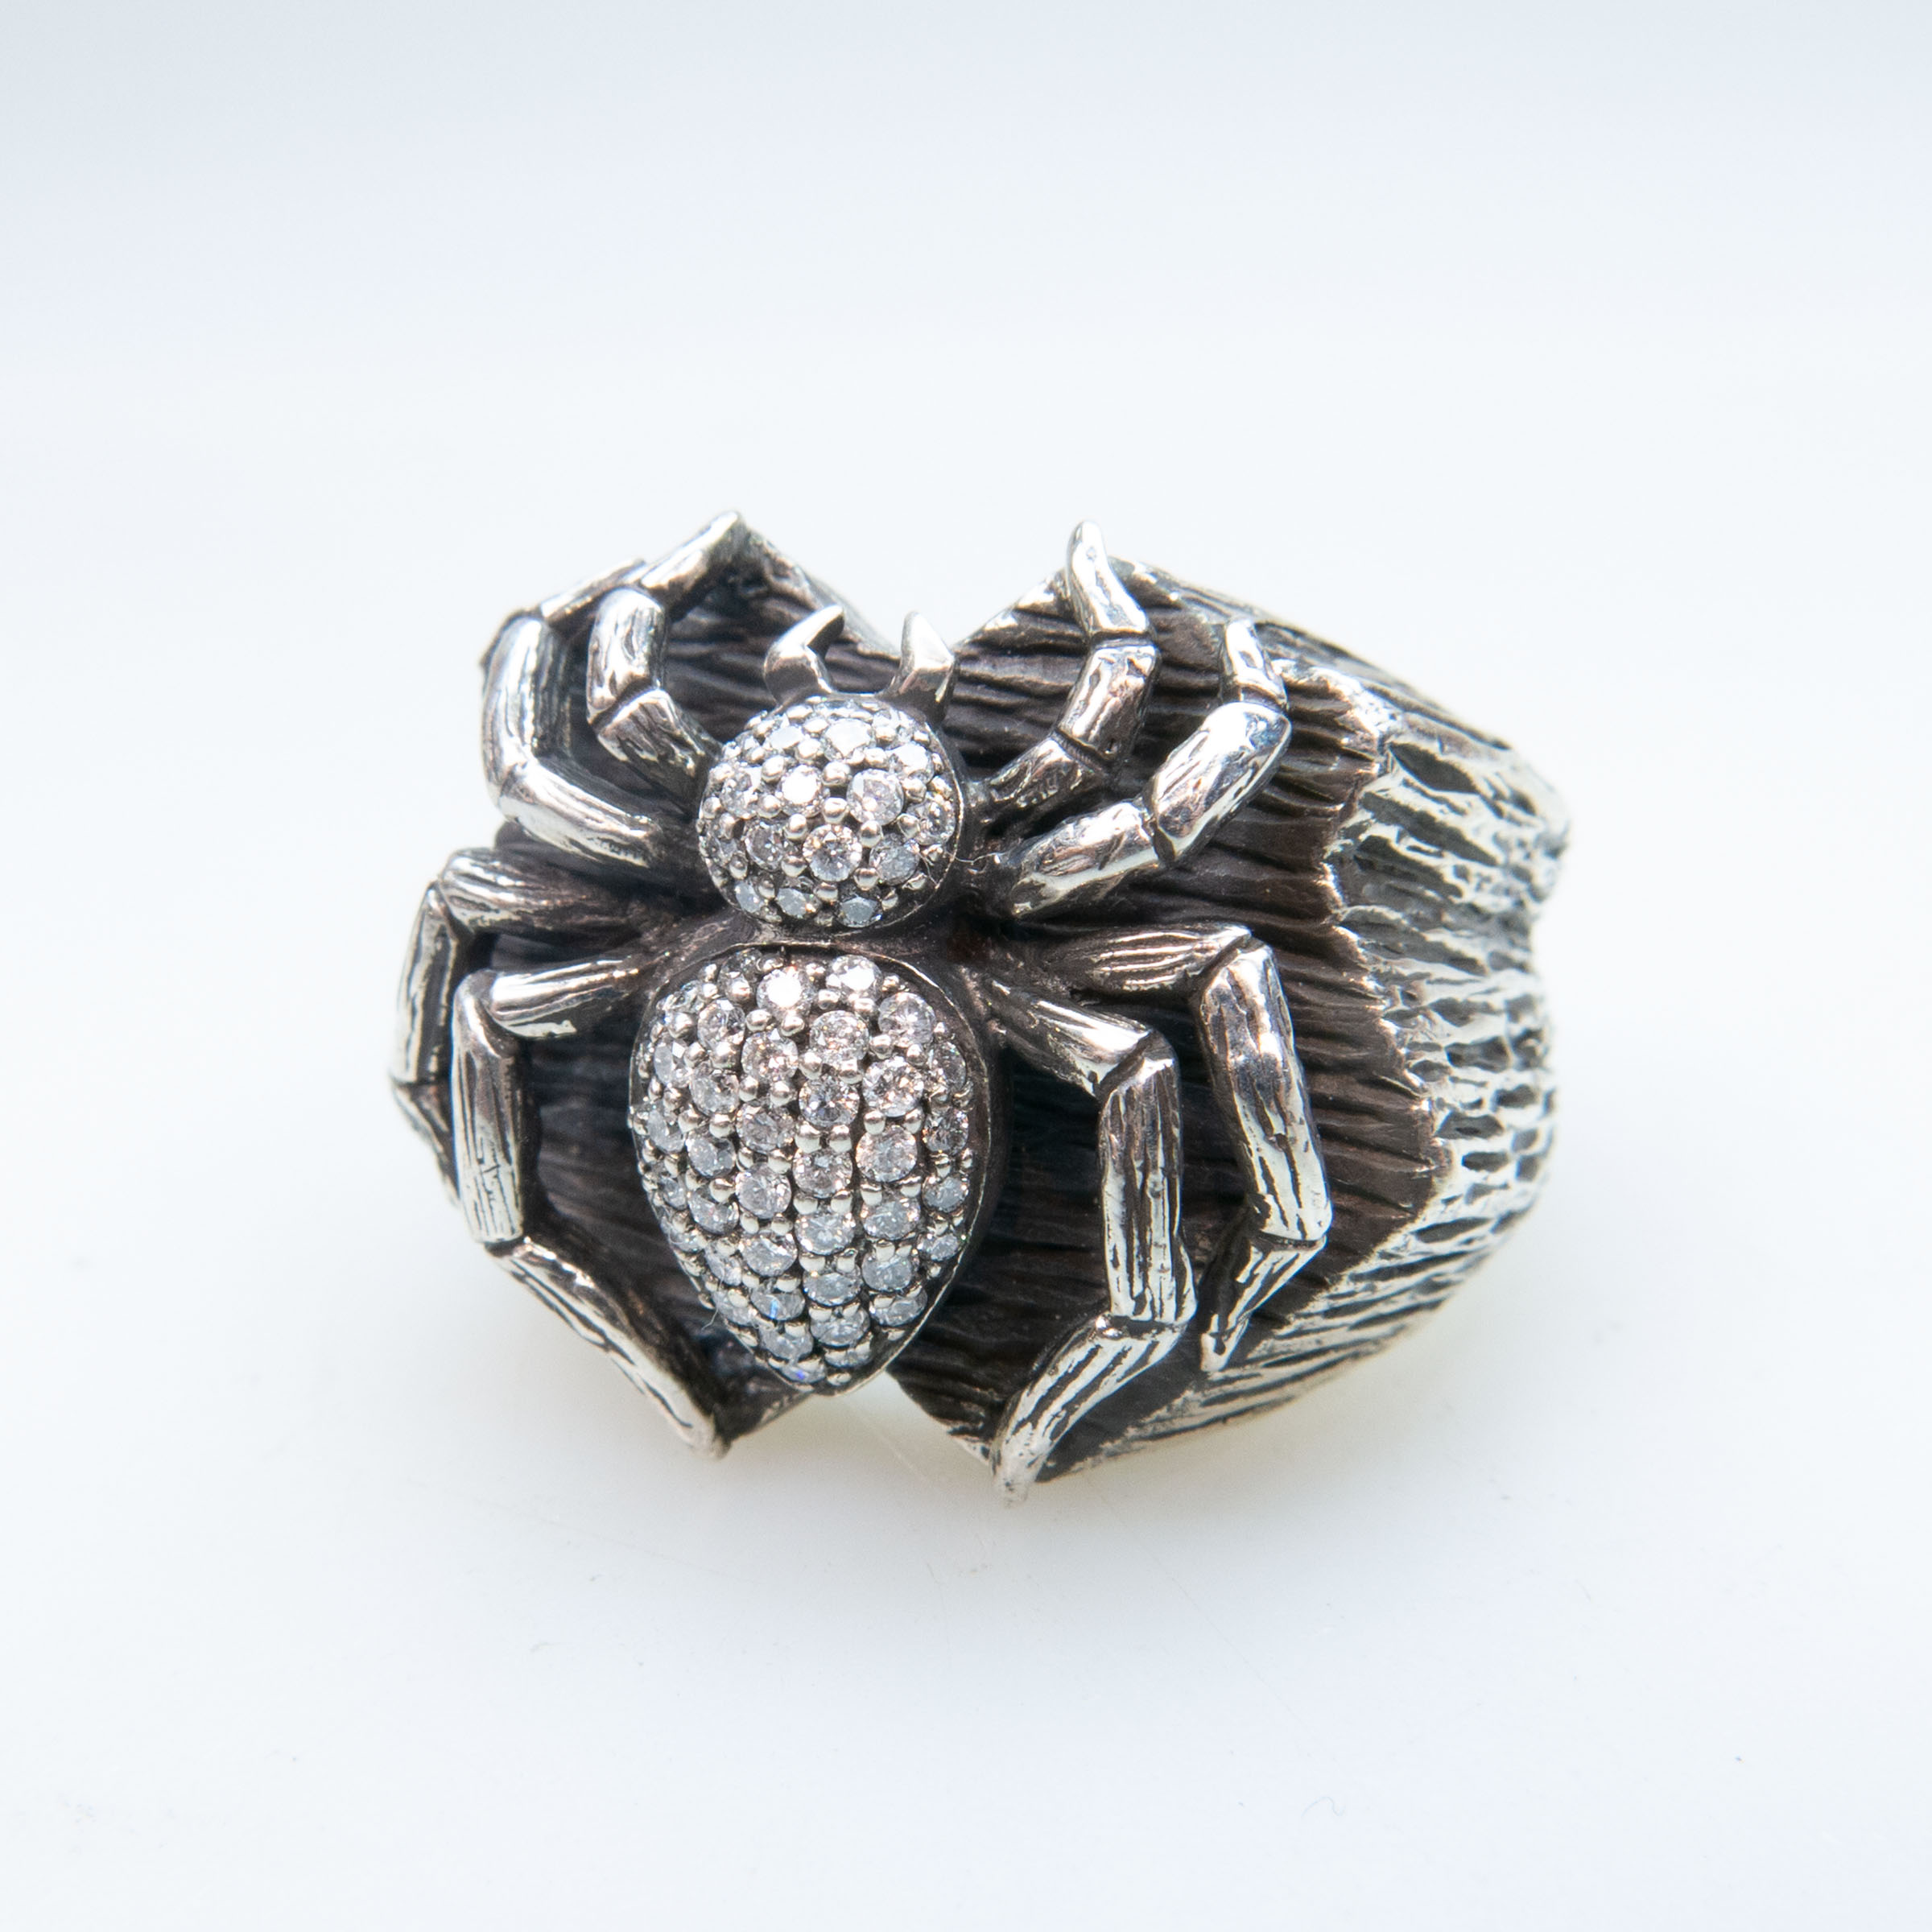 Men's Sterling Silver 'Spider' Ring